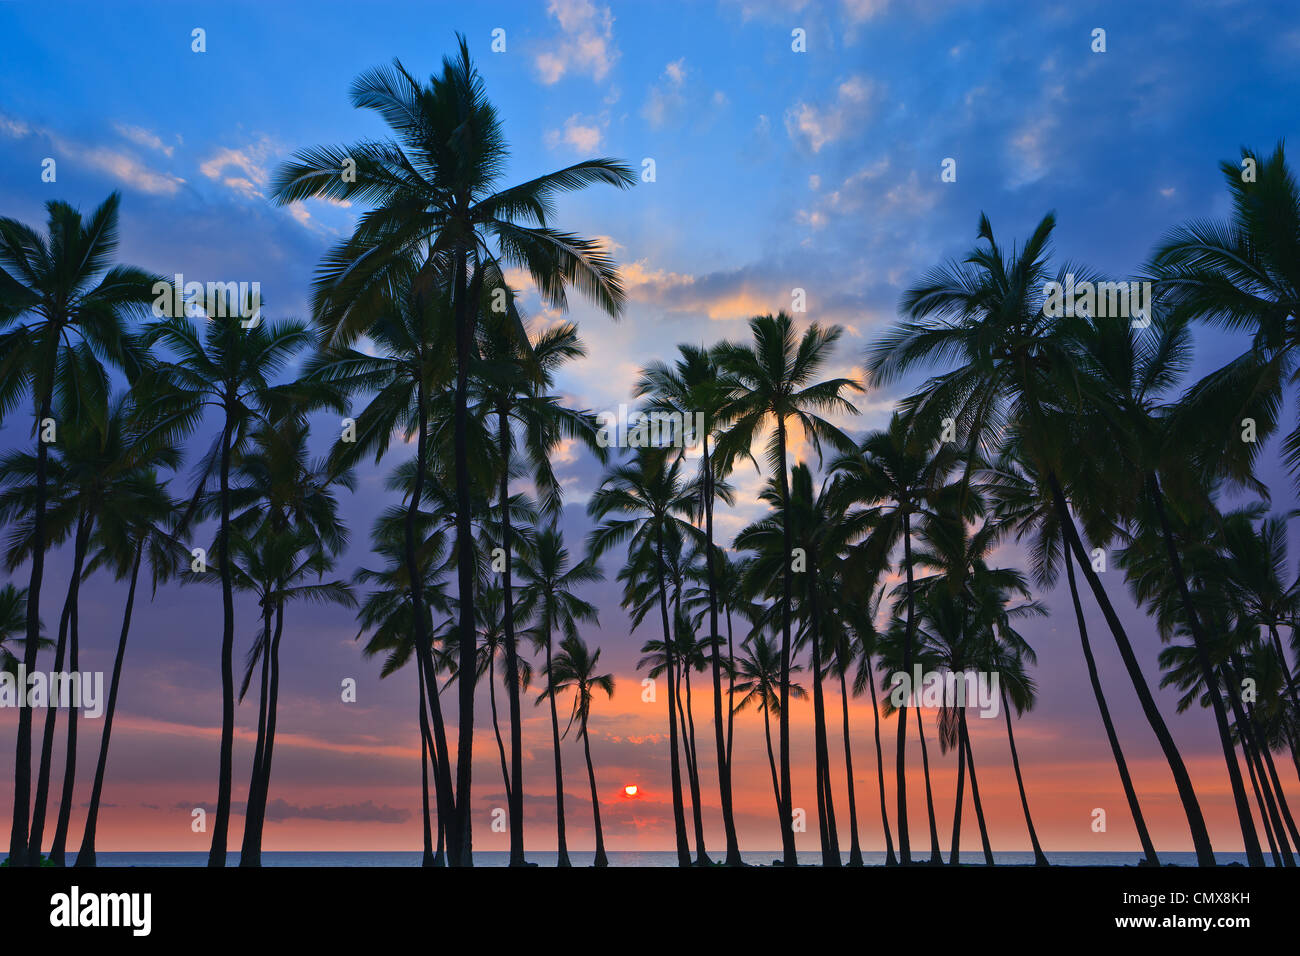 Palmtrees at Sunset at Pu'uhonua o Hōnaunau National Historical Park - The Big Island, Hawaii Stock Photo